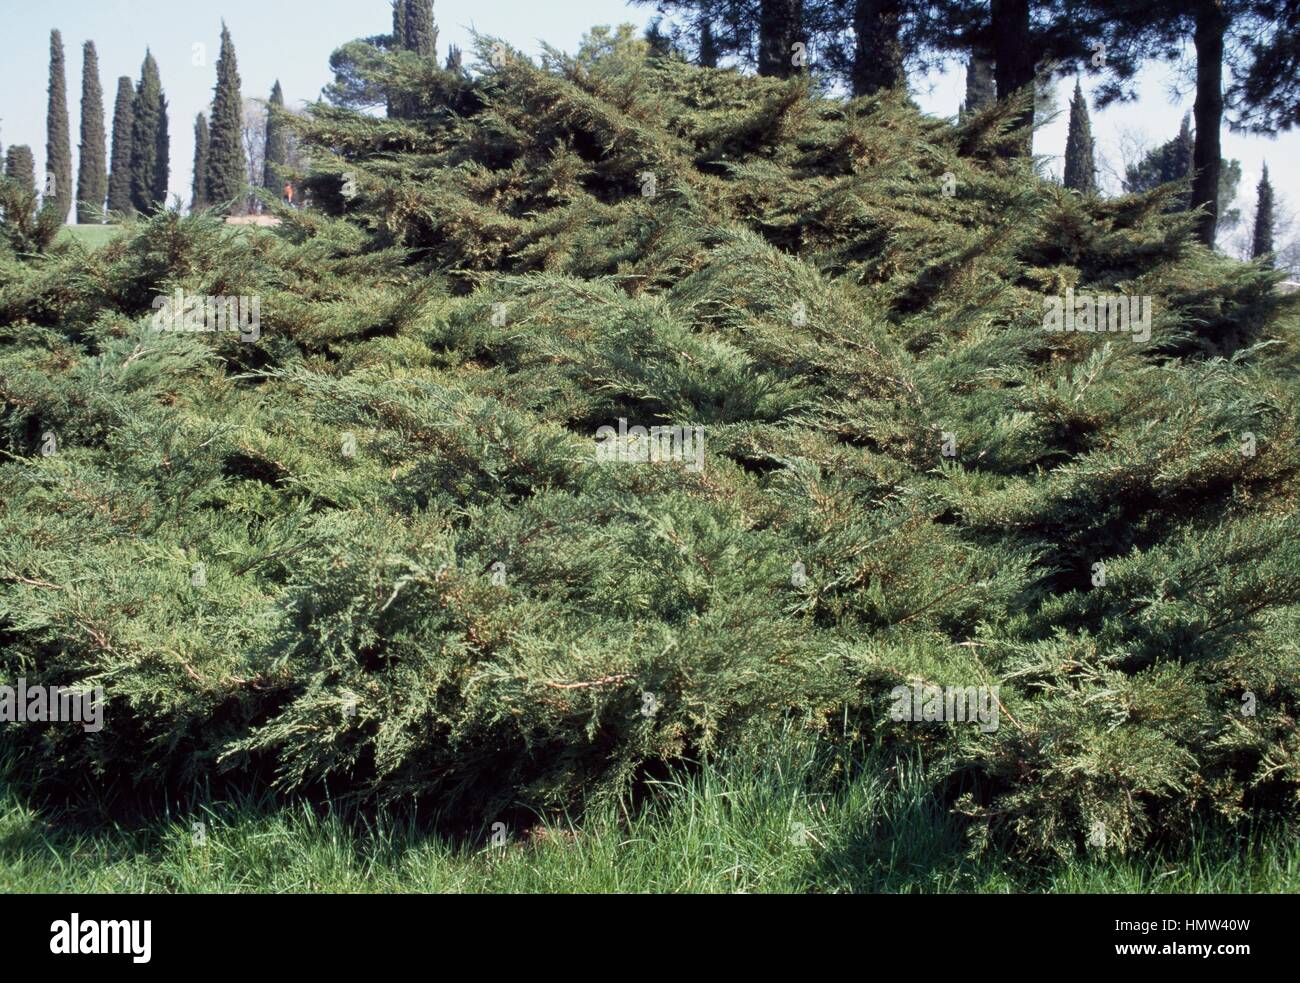 Chinese juniper (Juniperus x pfitzeriana), Cupressaceae. Stock Photo